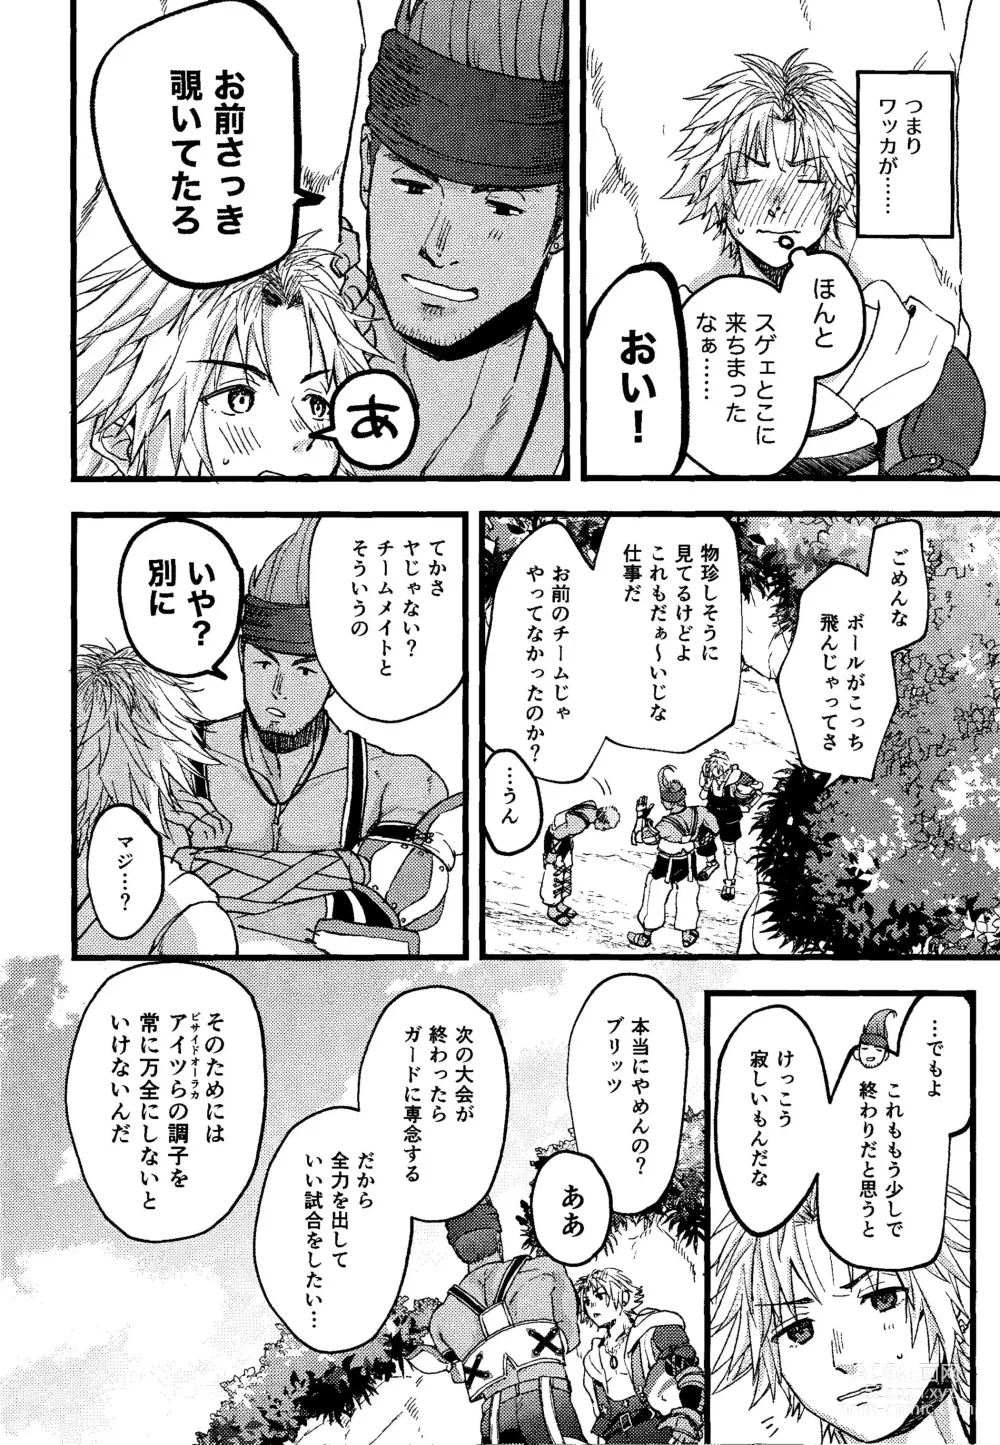 Page 5 of doujinshi Wakka